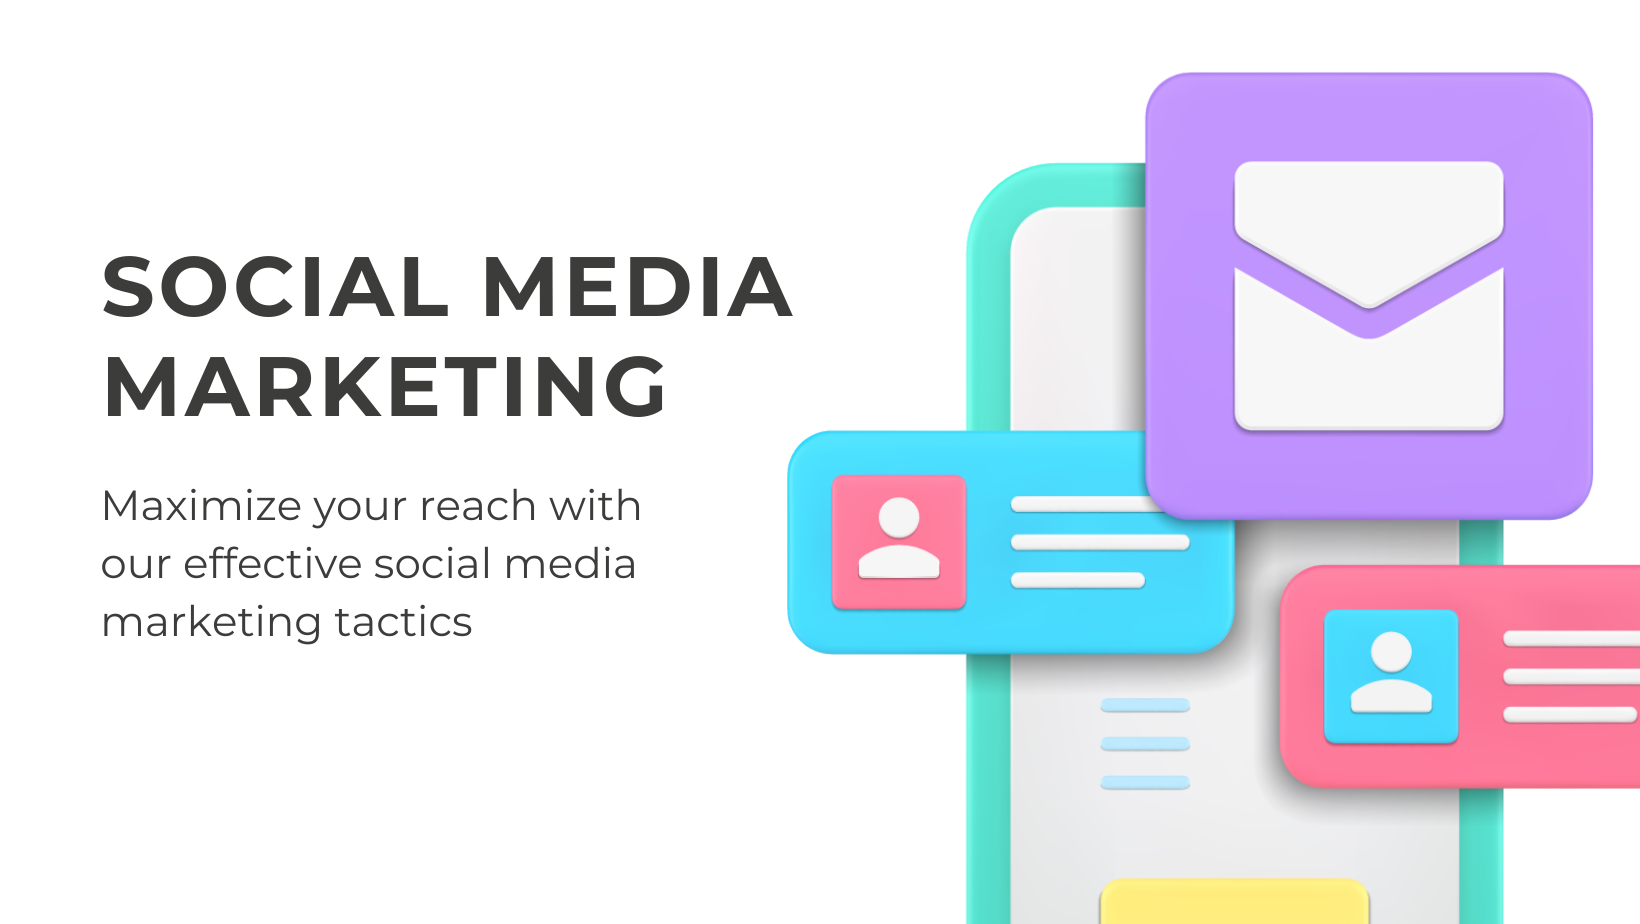 Social Media Marketing Jobs 101: A Comprehensive Companion Guide